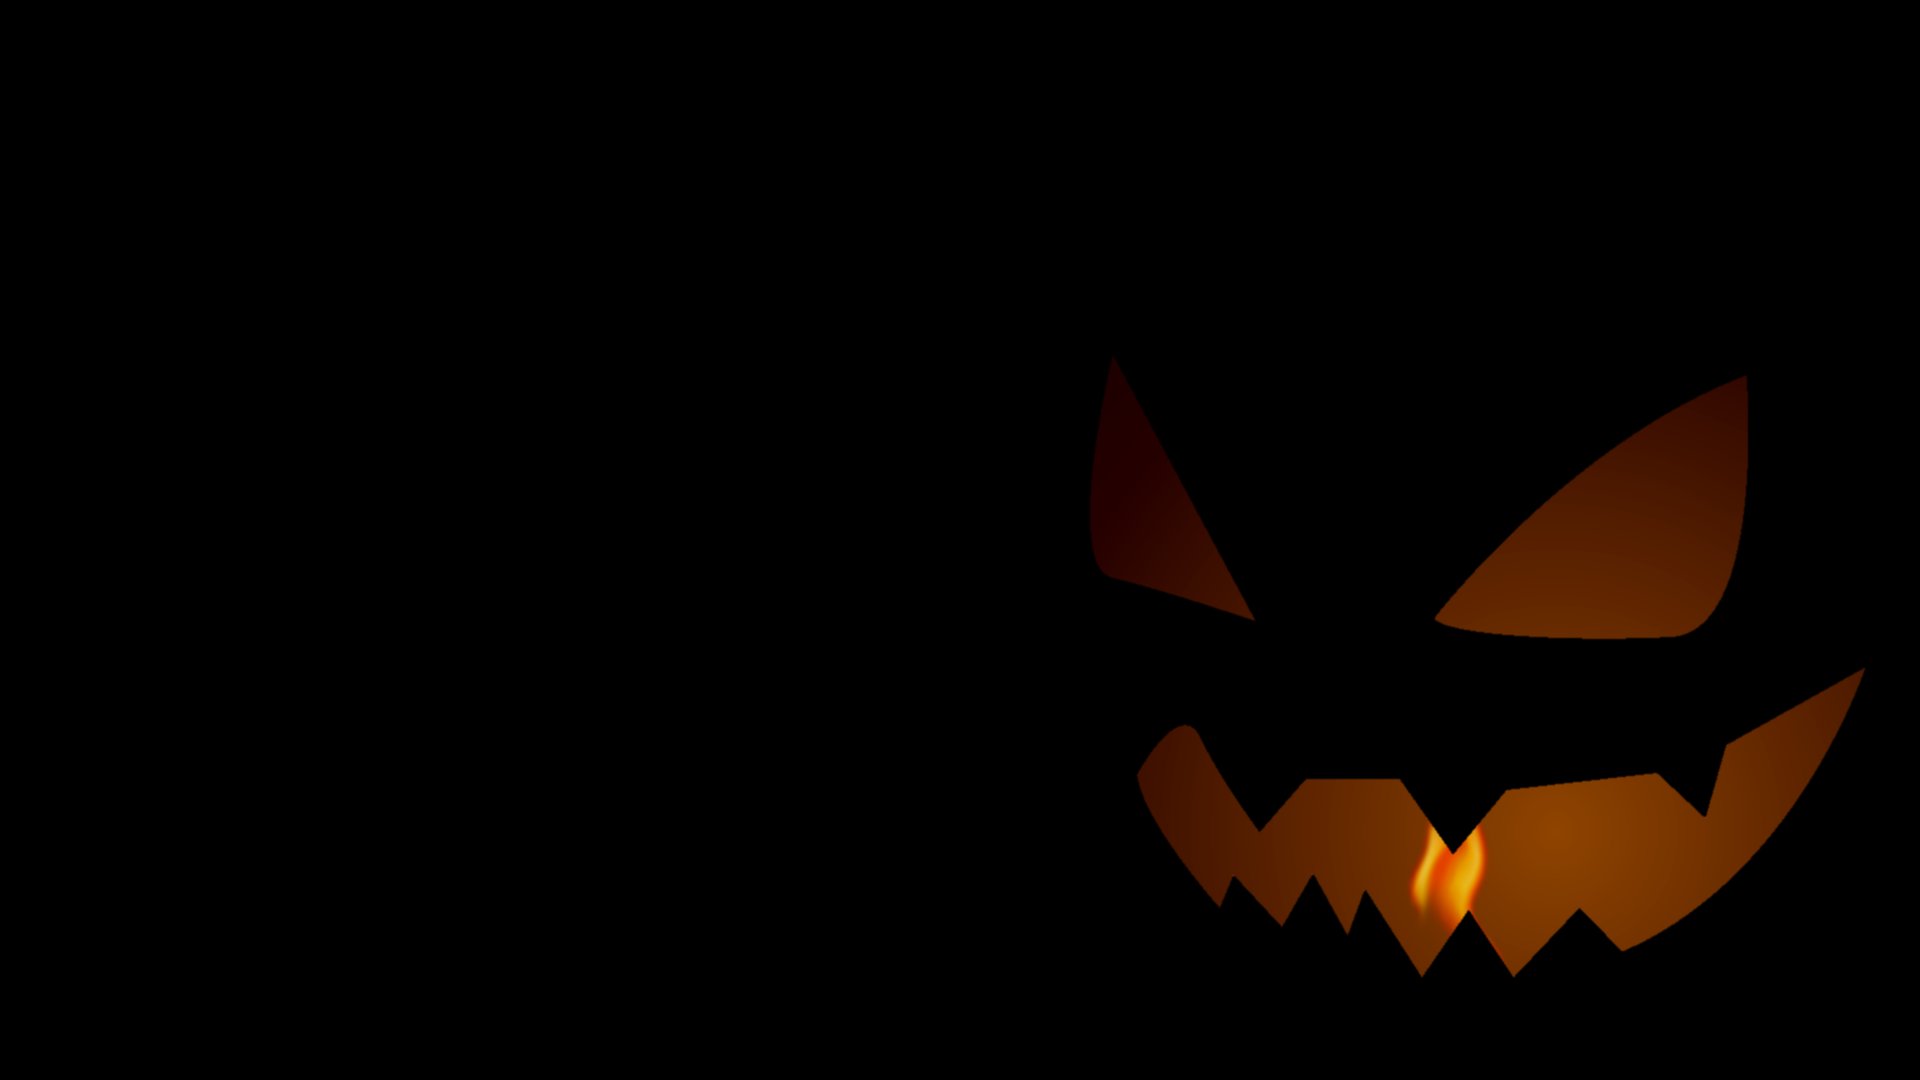  Unusual Halloween Backgrounds Animated Halloween with Dark Background